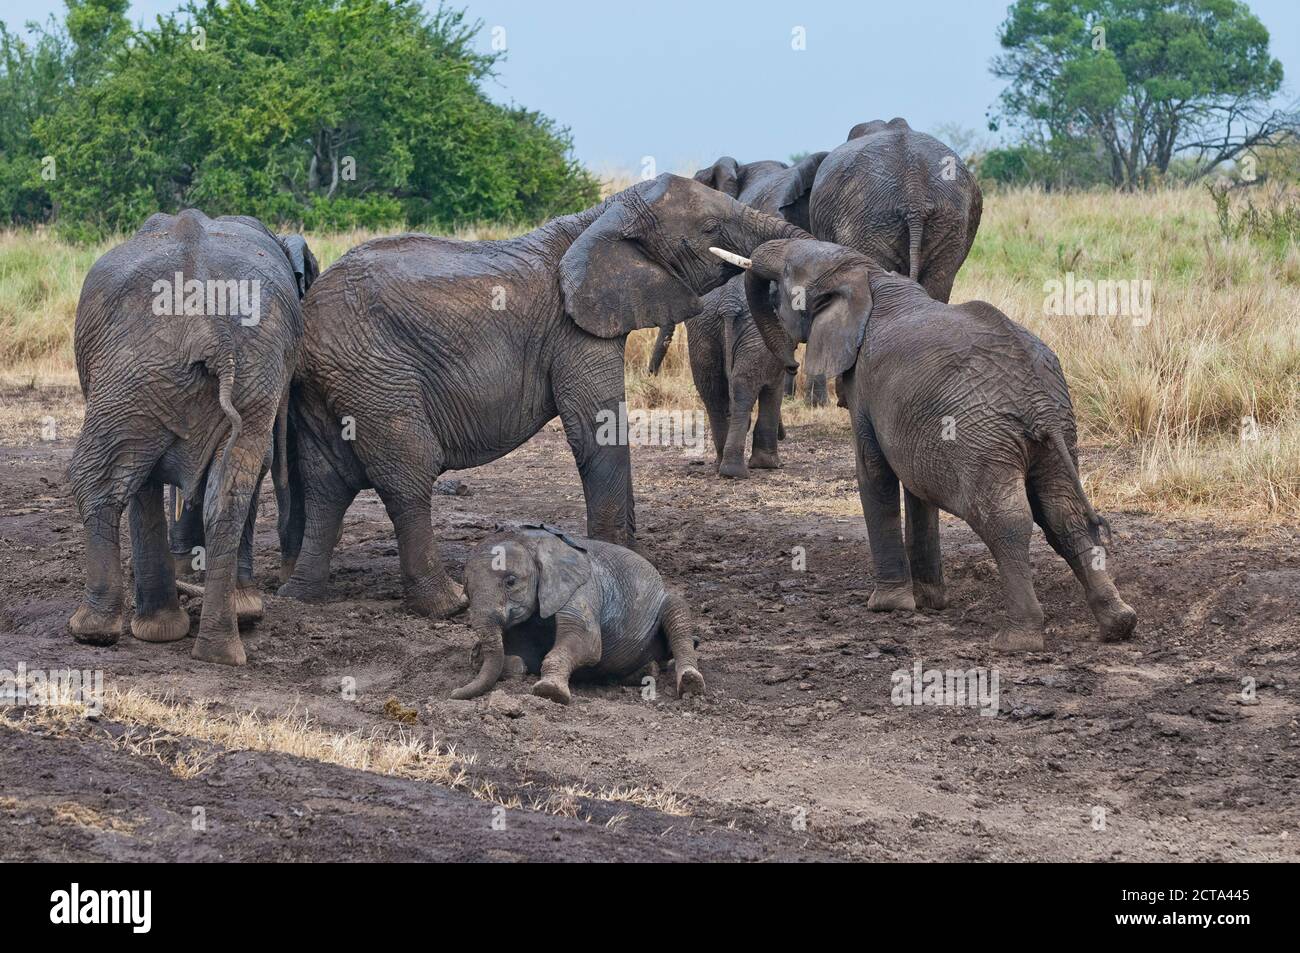 Africa, Kenya, Maasai Mara National Reserve, African Bush Elephants, Loxodonta africana, elephant family, juvenile Elephants testing their strength Stock Photo